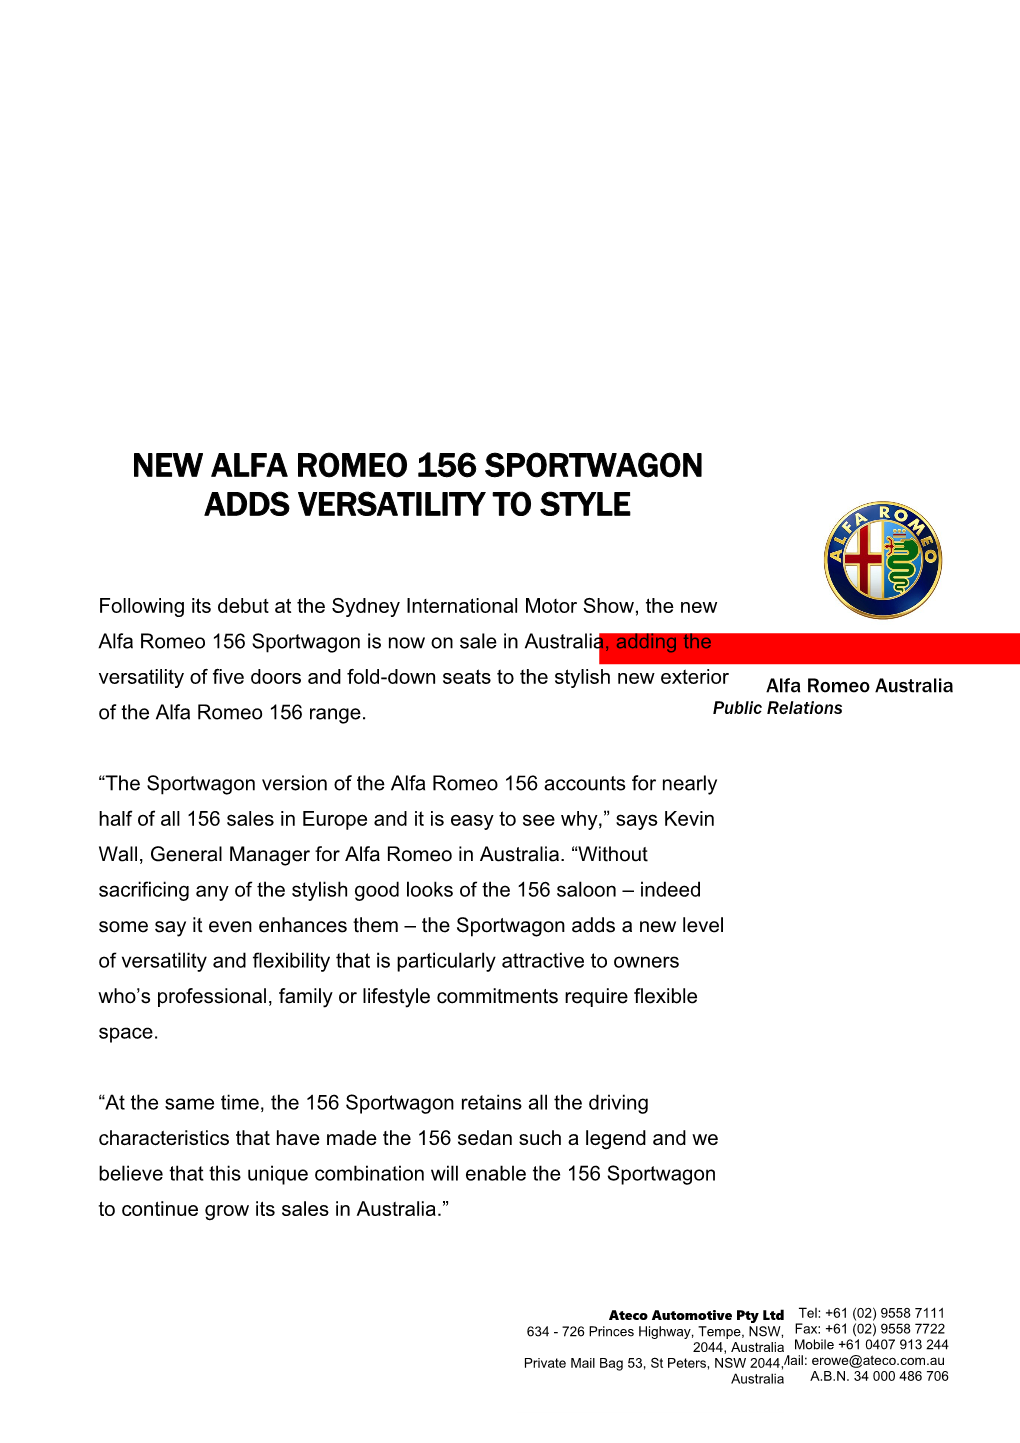 New Alfa Romeo 156 Sportwagon Adds Versatility to Style